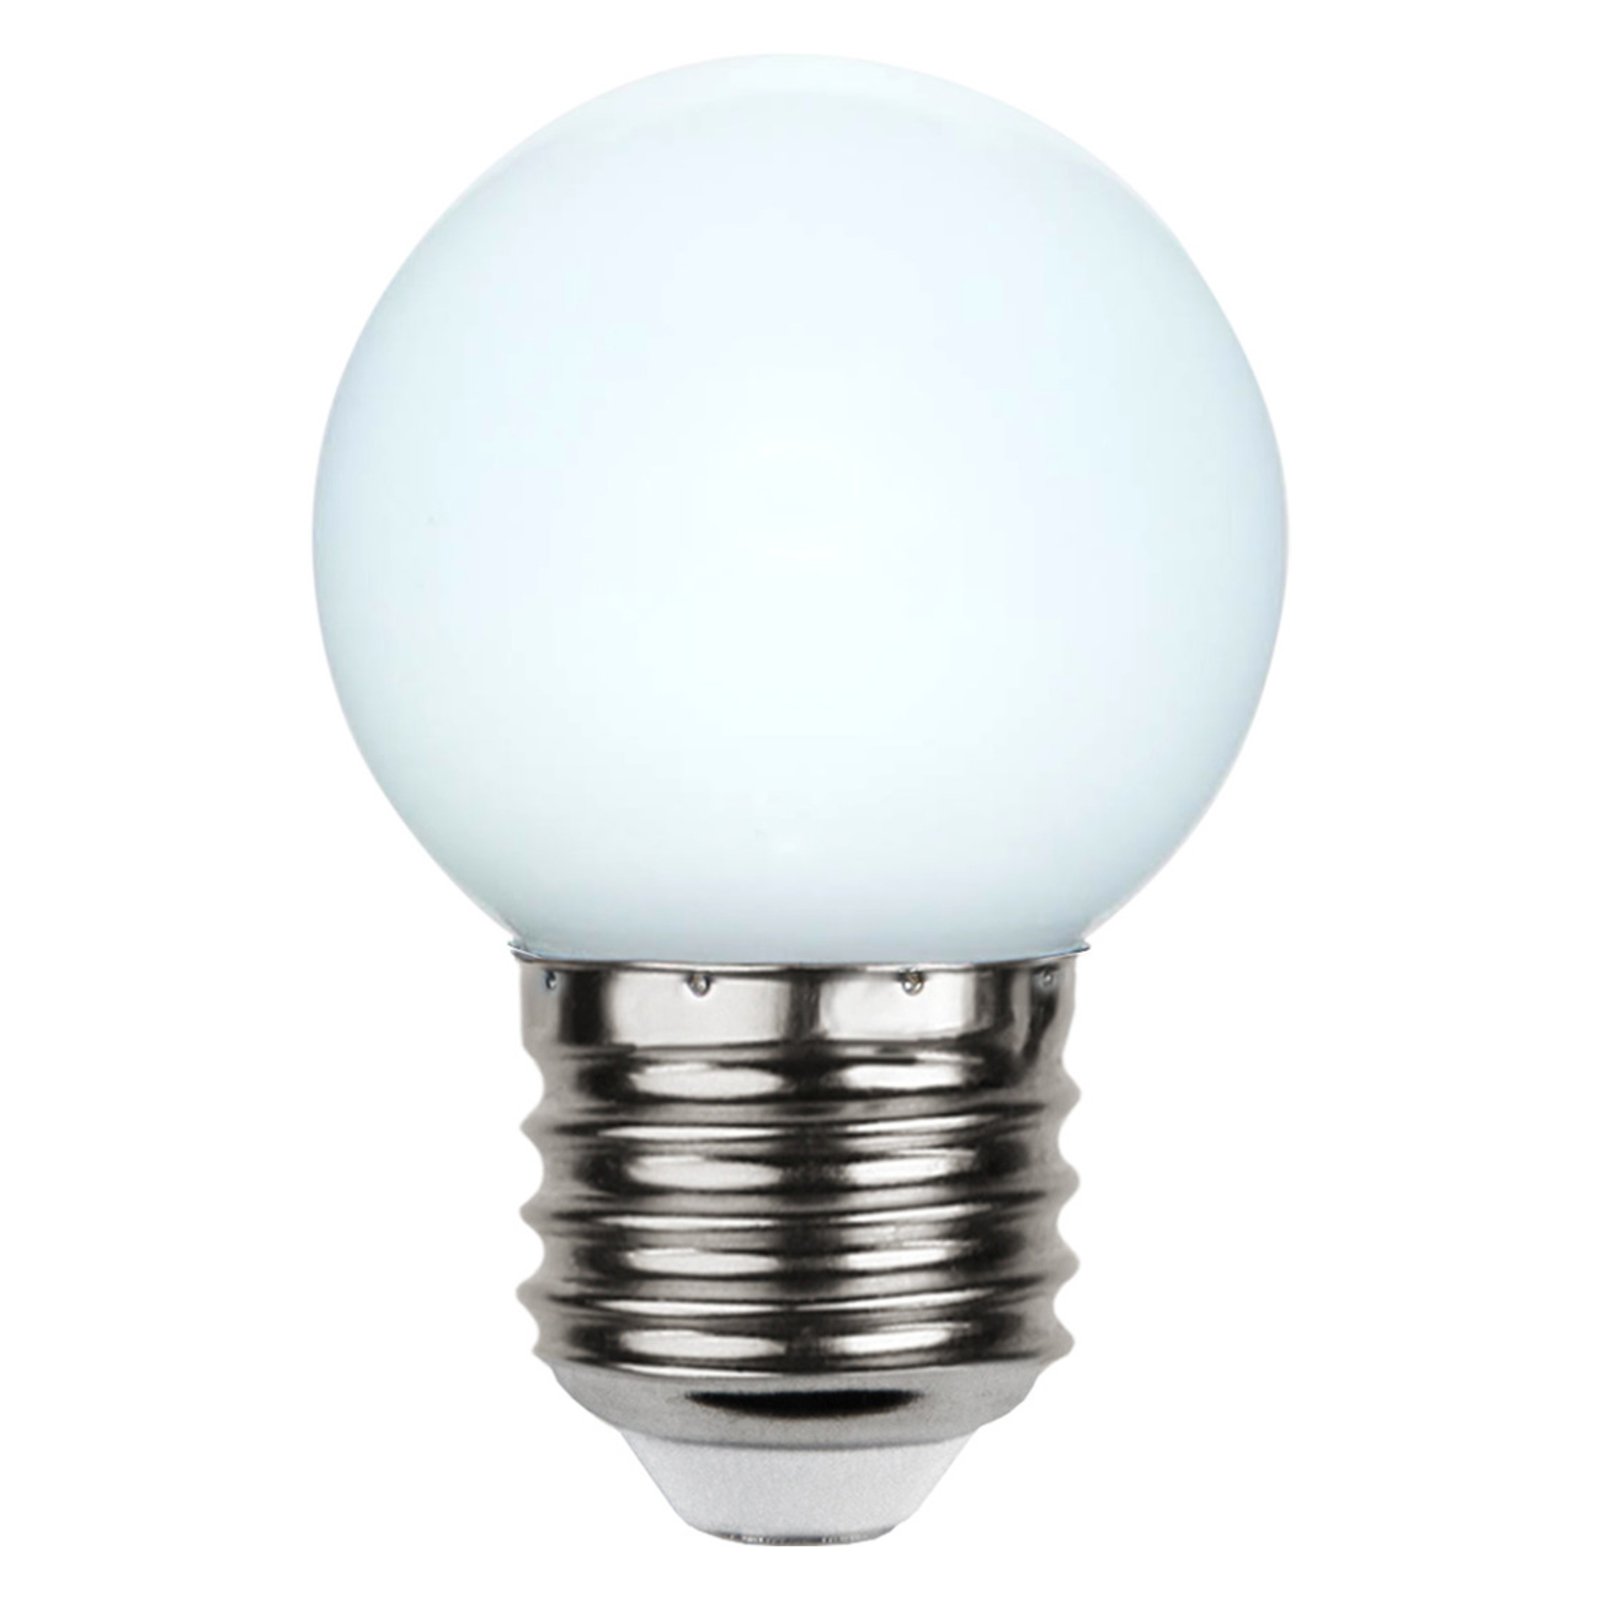 LED lempa E27 G45, skirta pasakų žibintams, balta 6500K